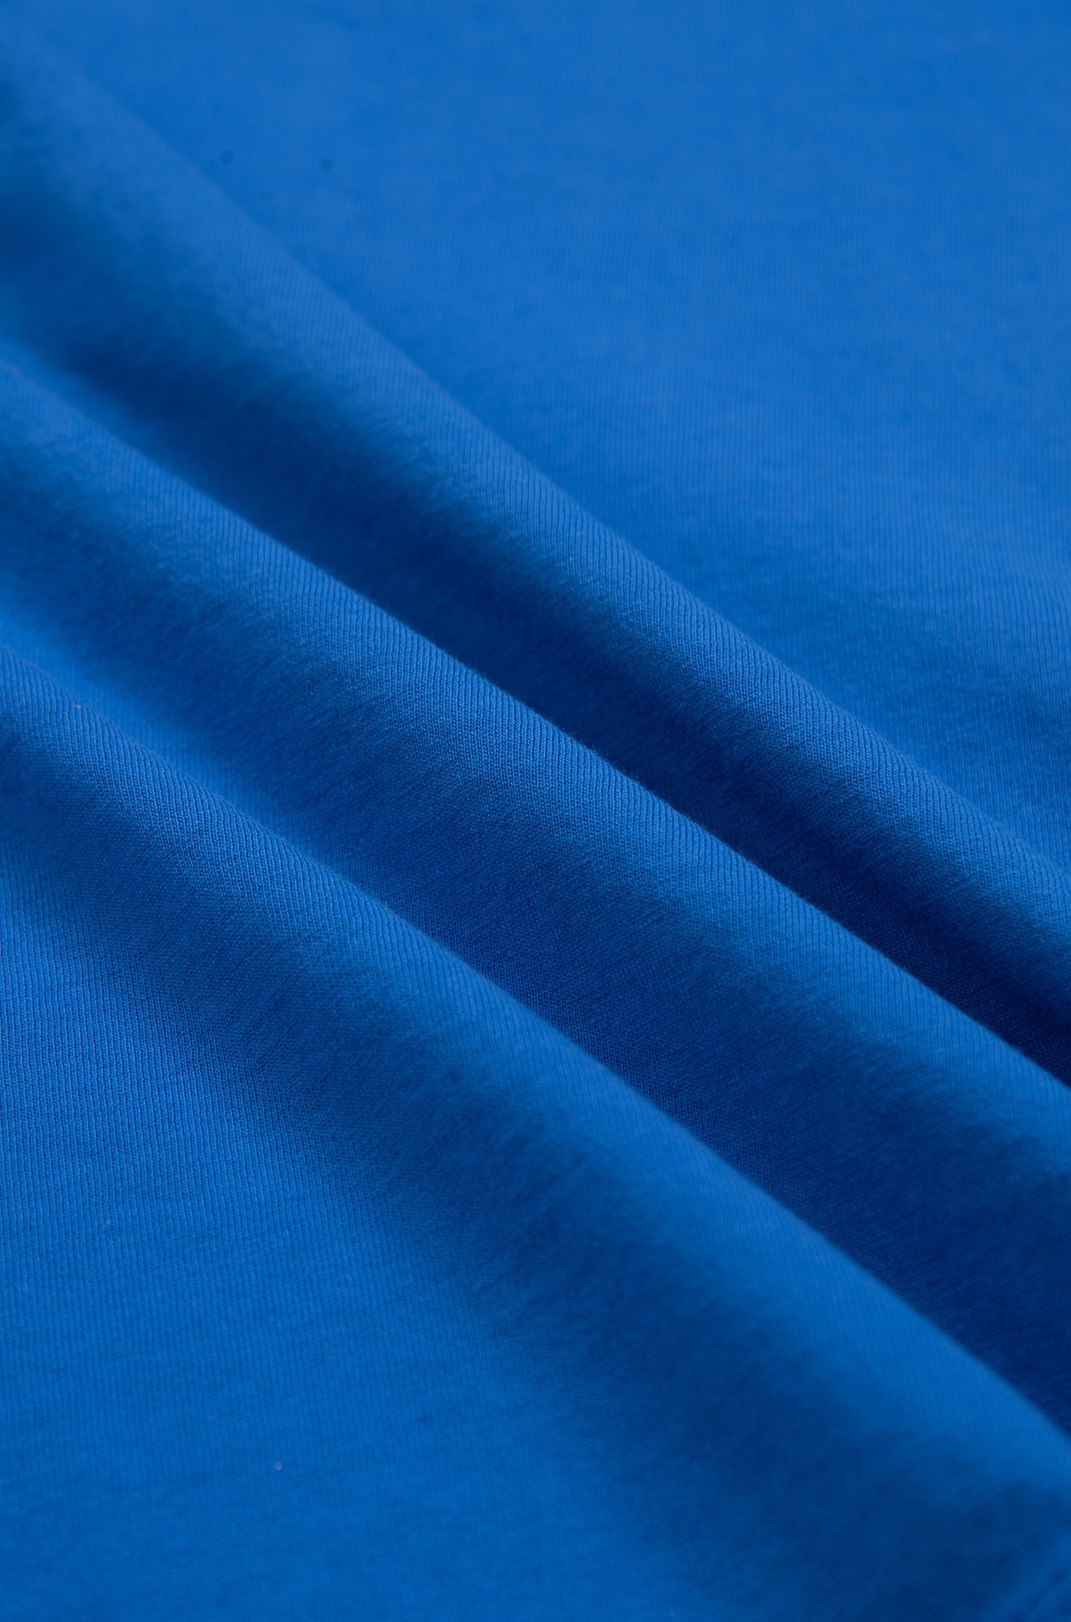 Camiseta Bold Approve Full Logo Azul